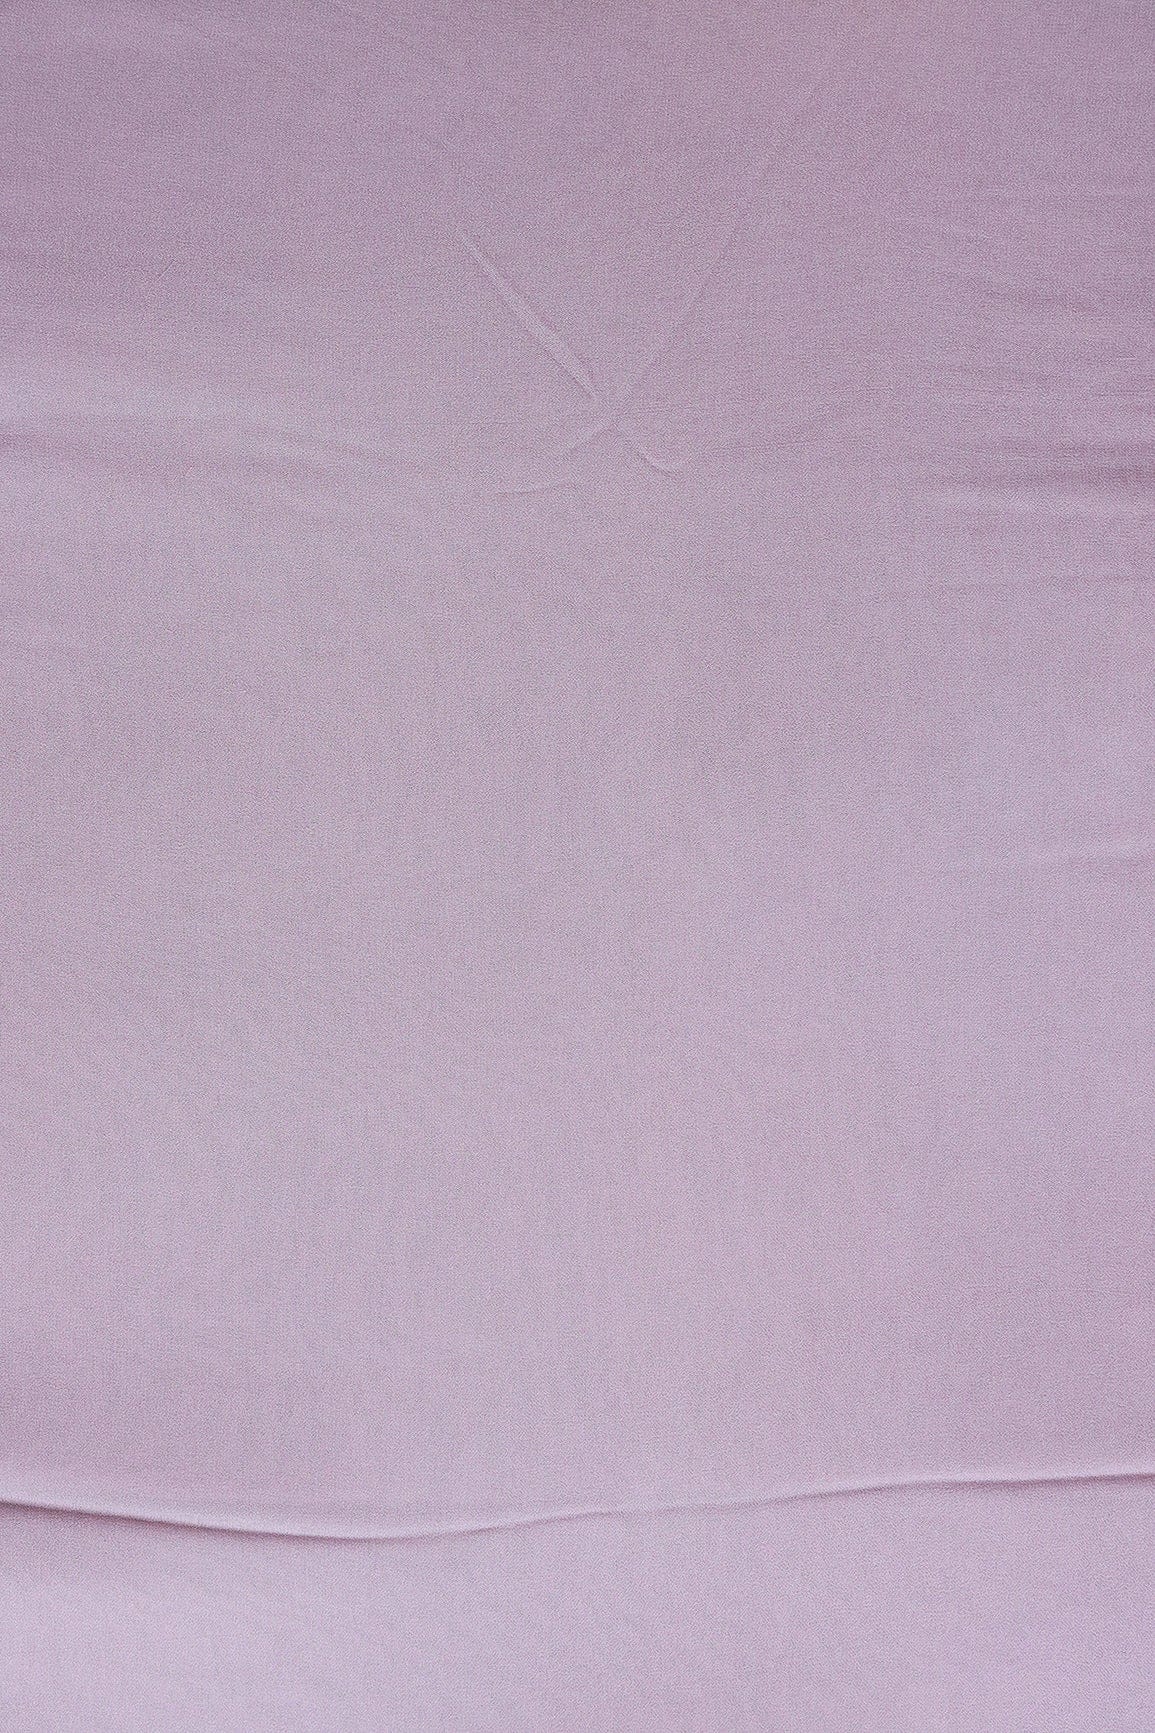 doeraa Plain Fabrics Mauve Dyed Viscose Georgette Fabric